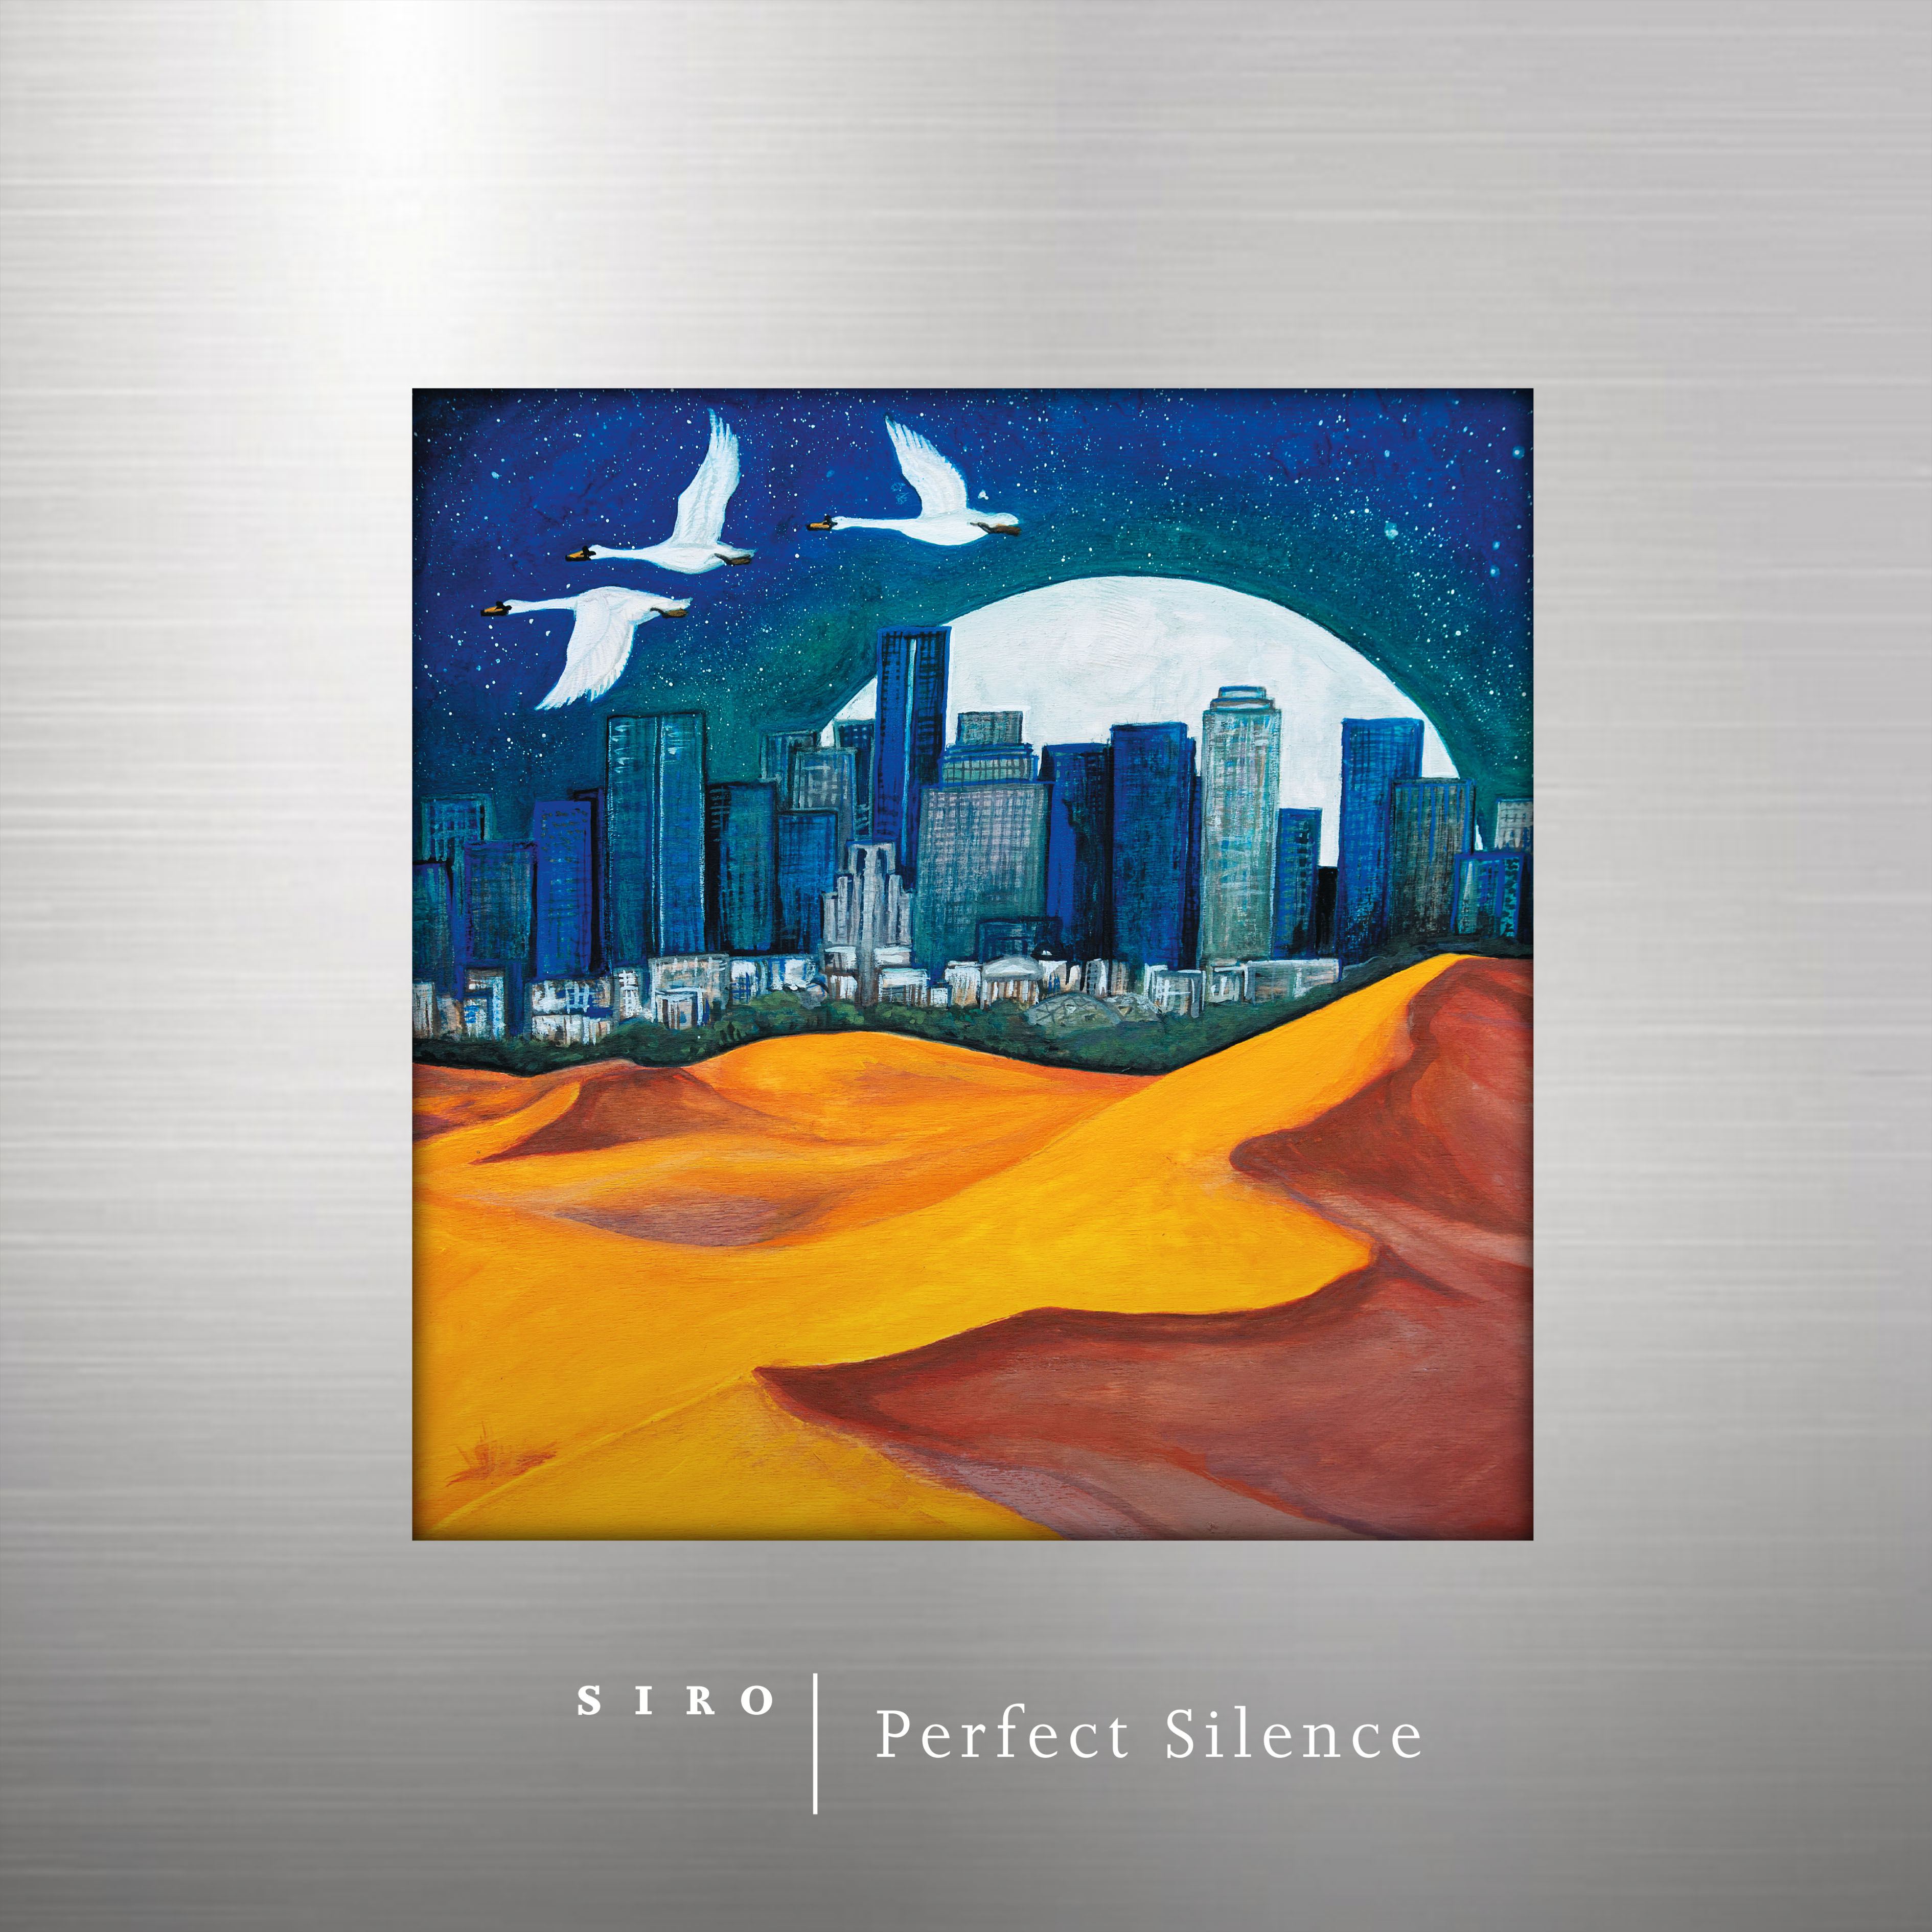 Siro - Perfect Silence